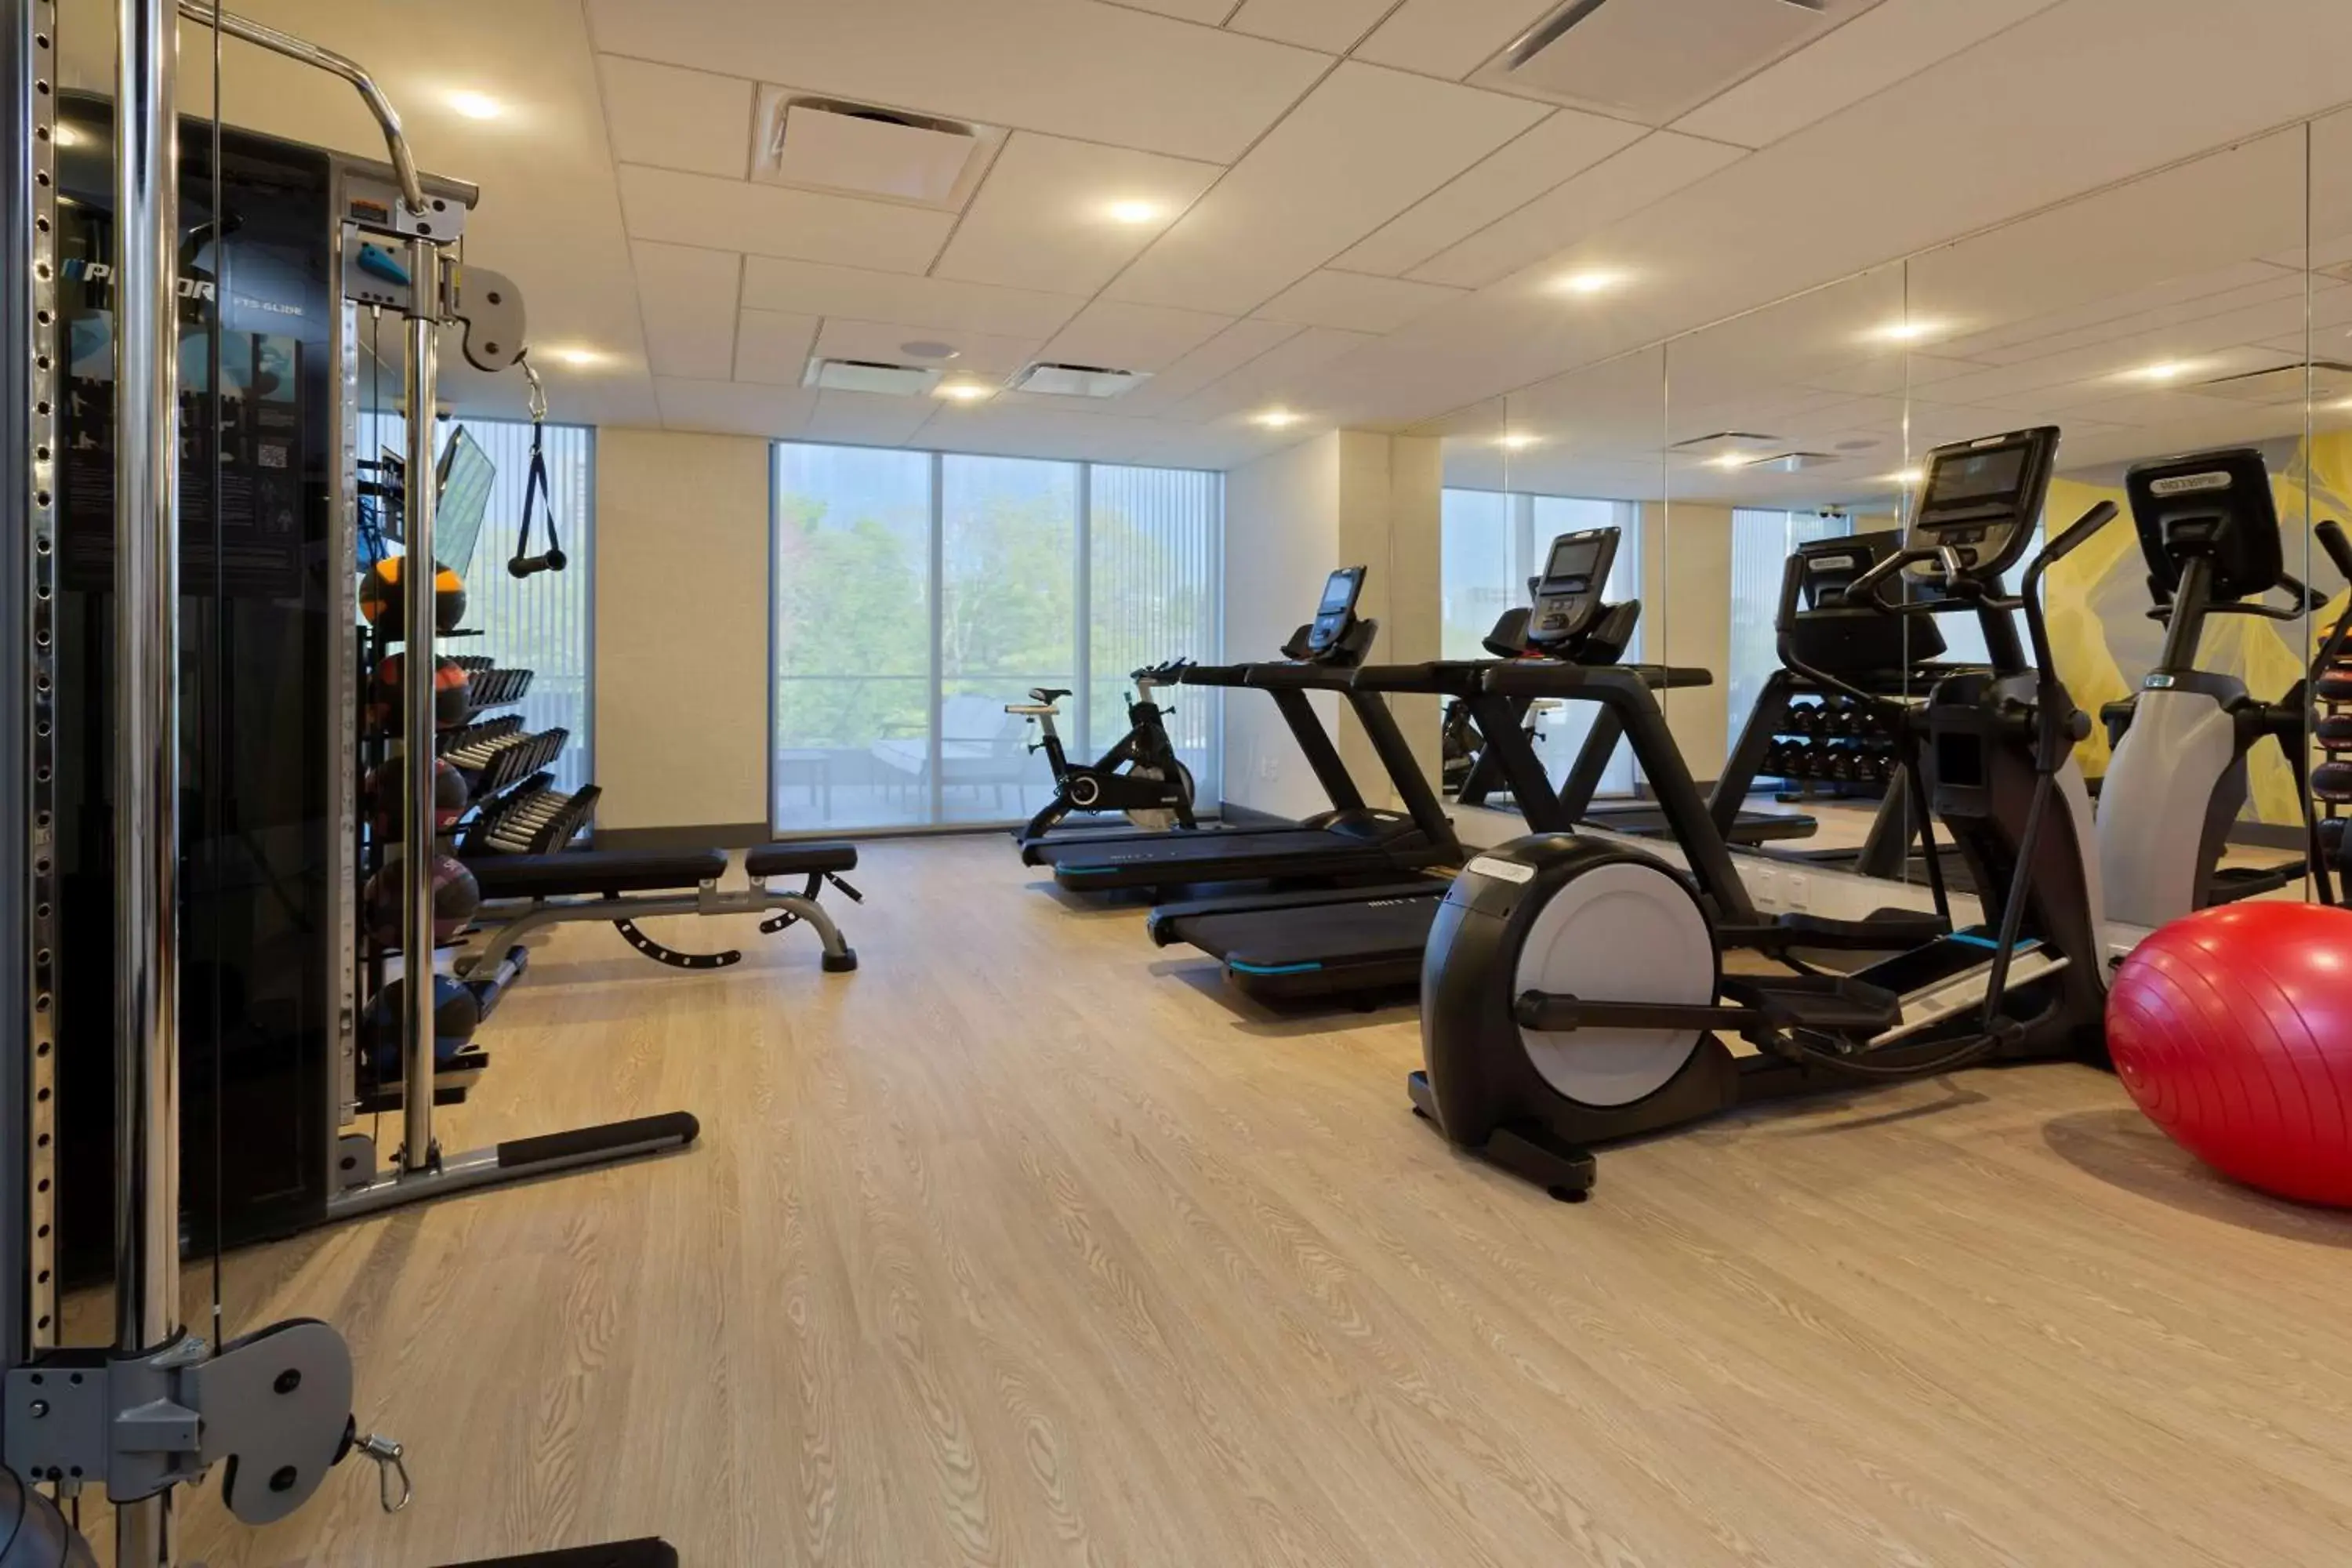 Fitness centre/facilities, Fitness Center/Facilities in Hilton Garden Inn Boston Brookline, Ma